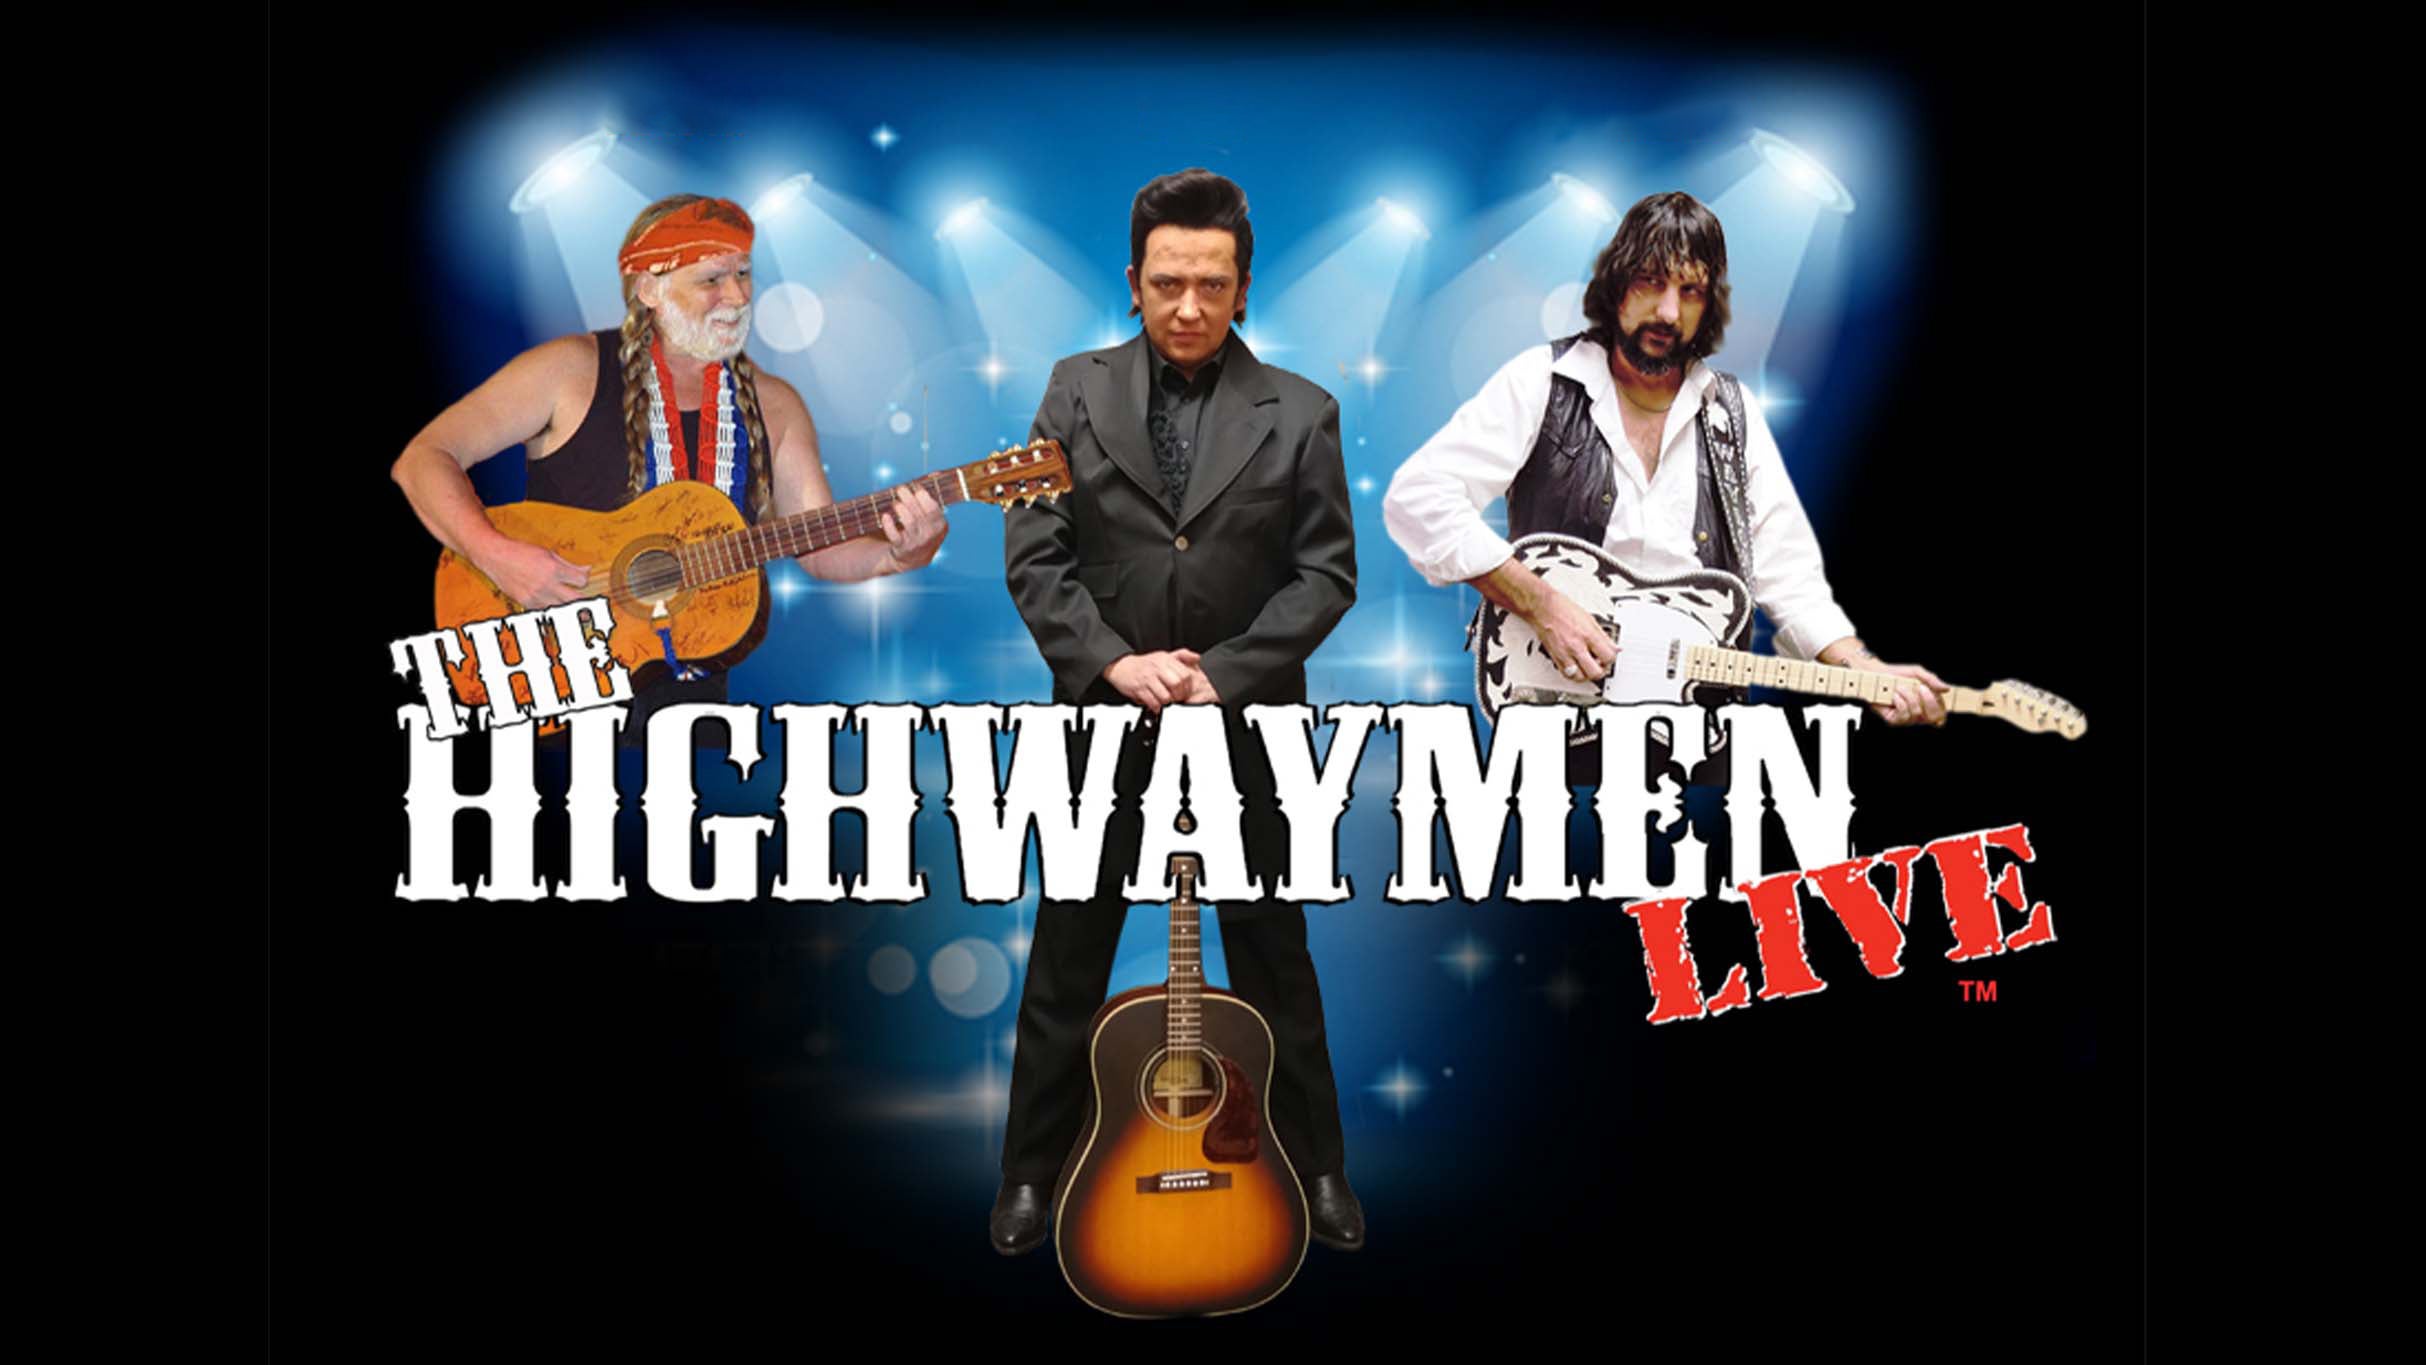 The Highwaymen Live presales in Florence